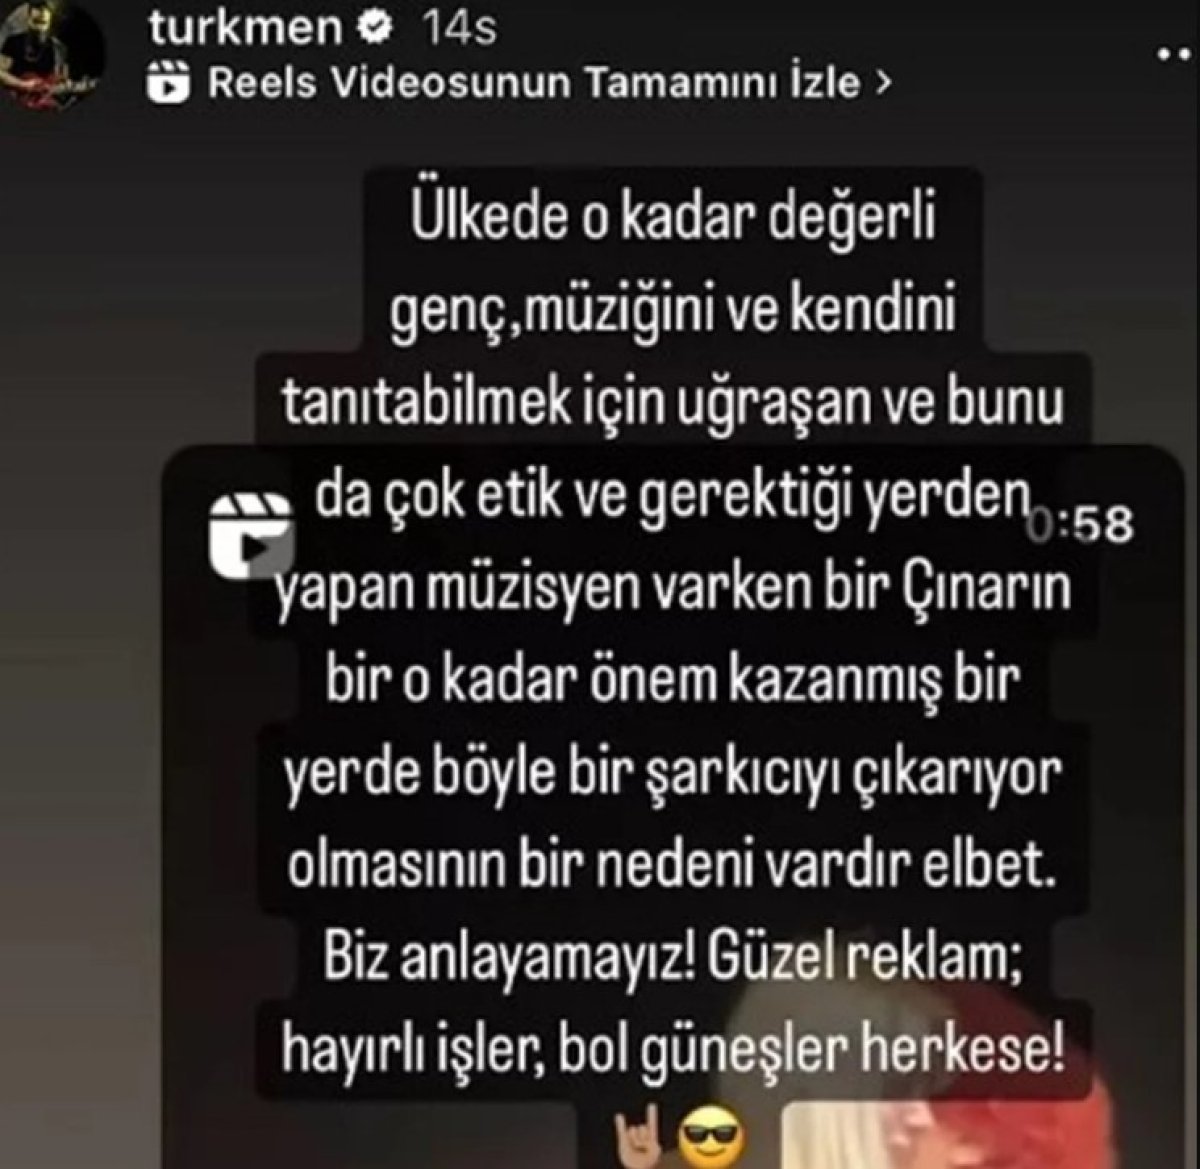 Selda Bağcan a Gökhan Türkmen den eleştiri  #2